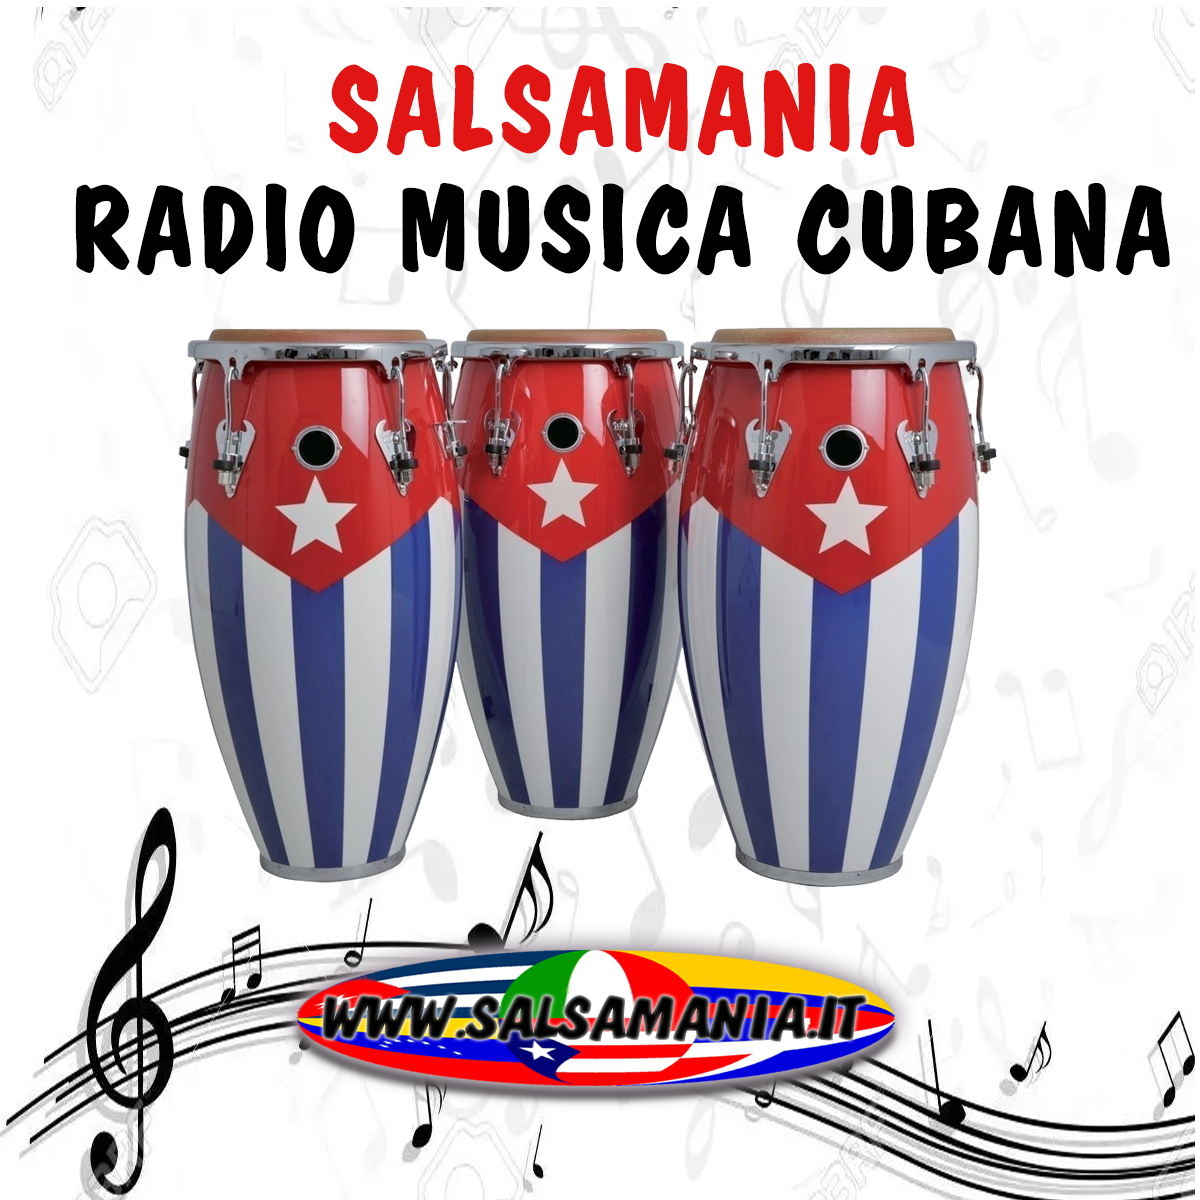 Salsamania Radio Musica Cubana